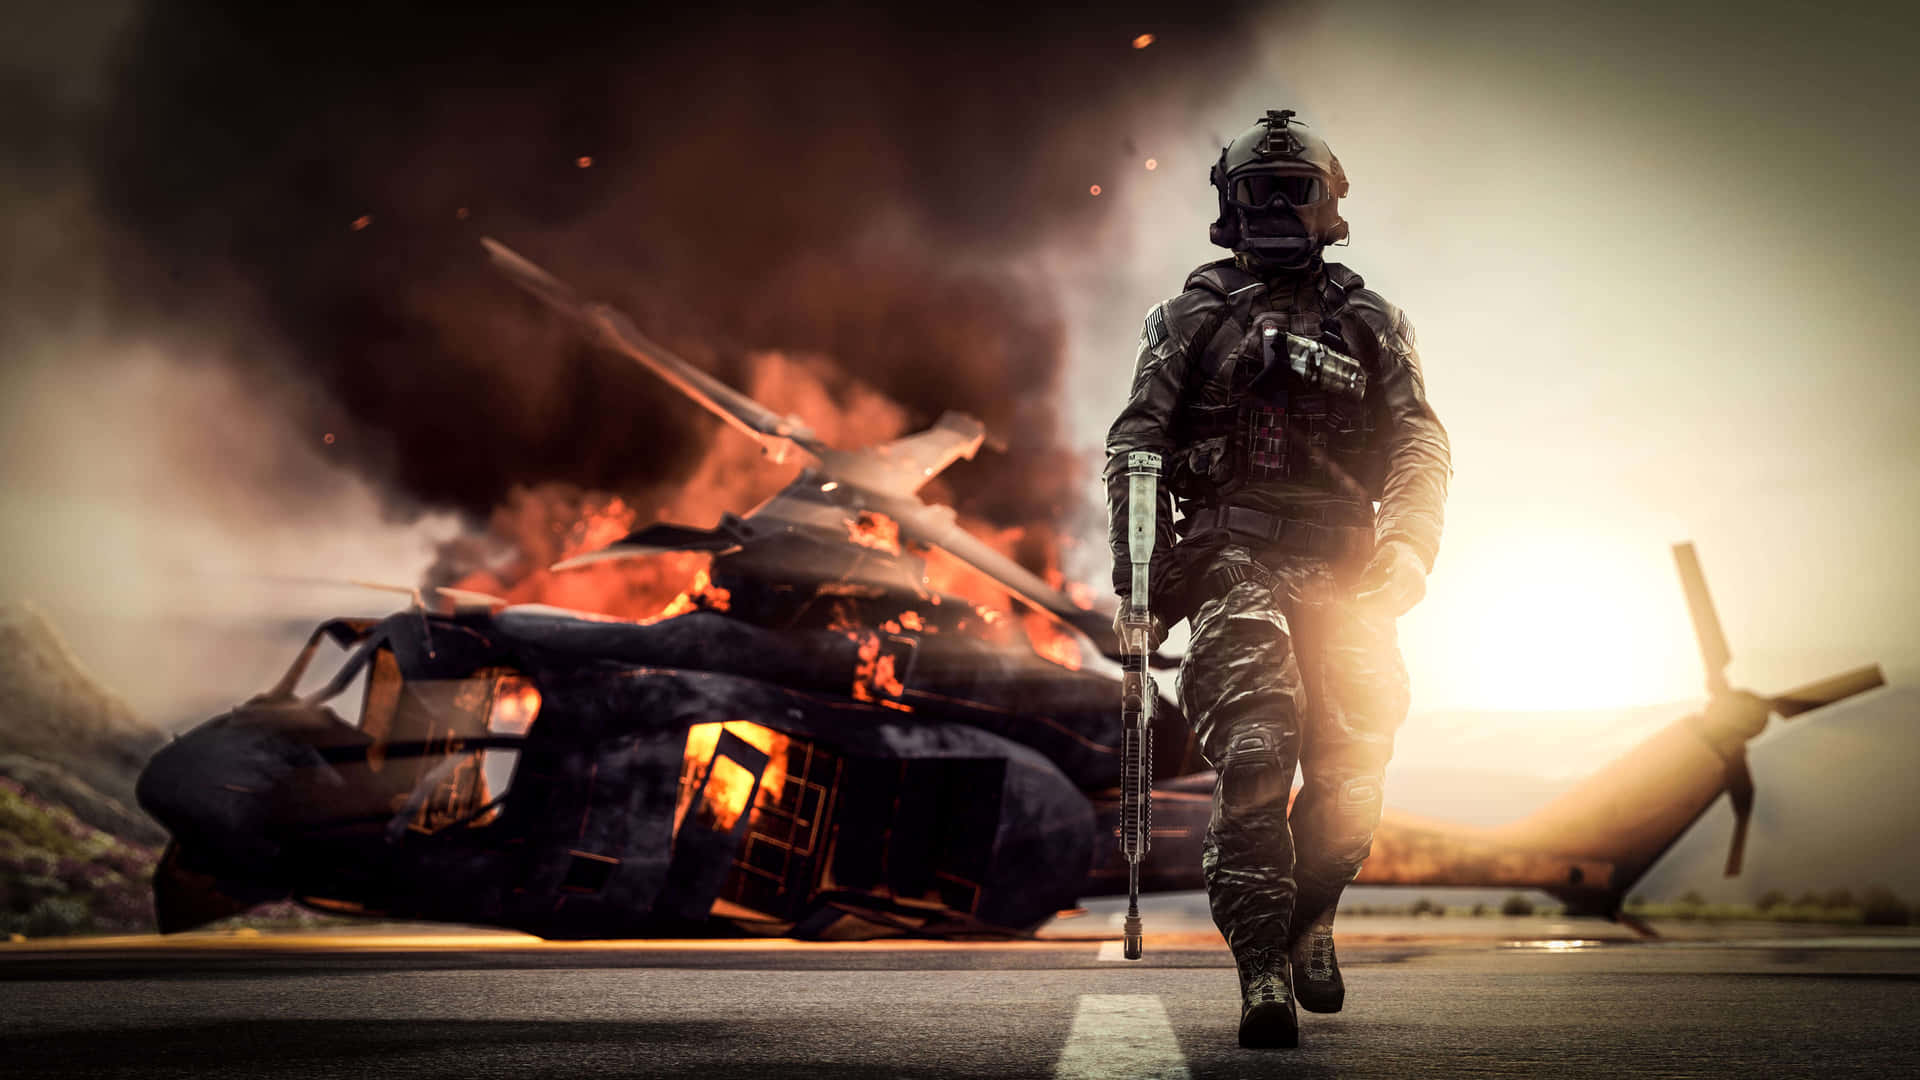 En soldat går foran en helikopter. Wallpaper